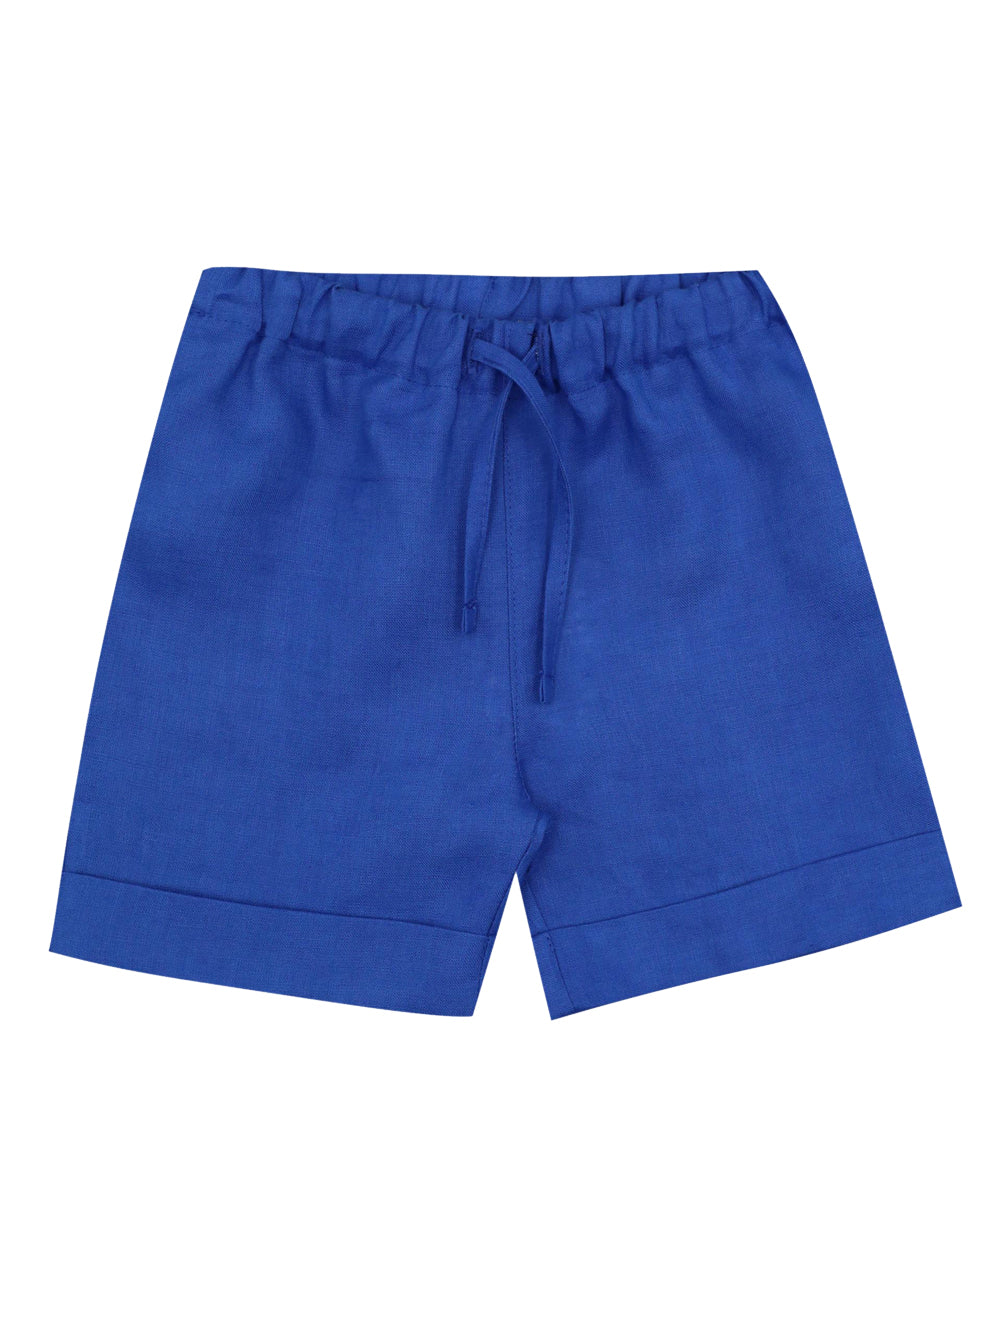 Classic Blue Shorts